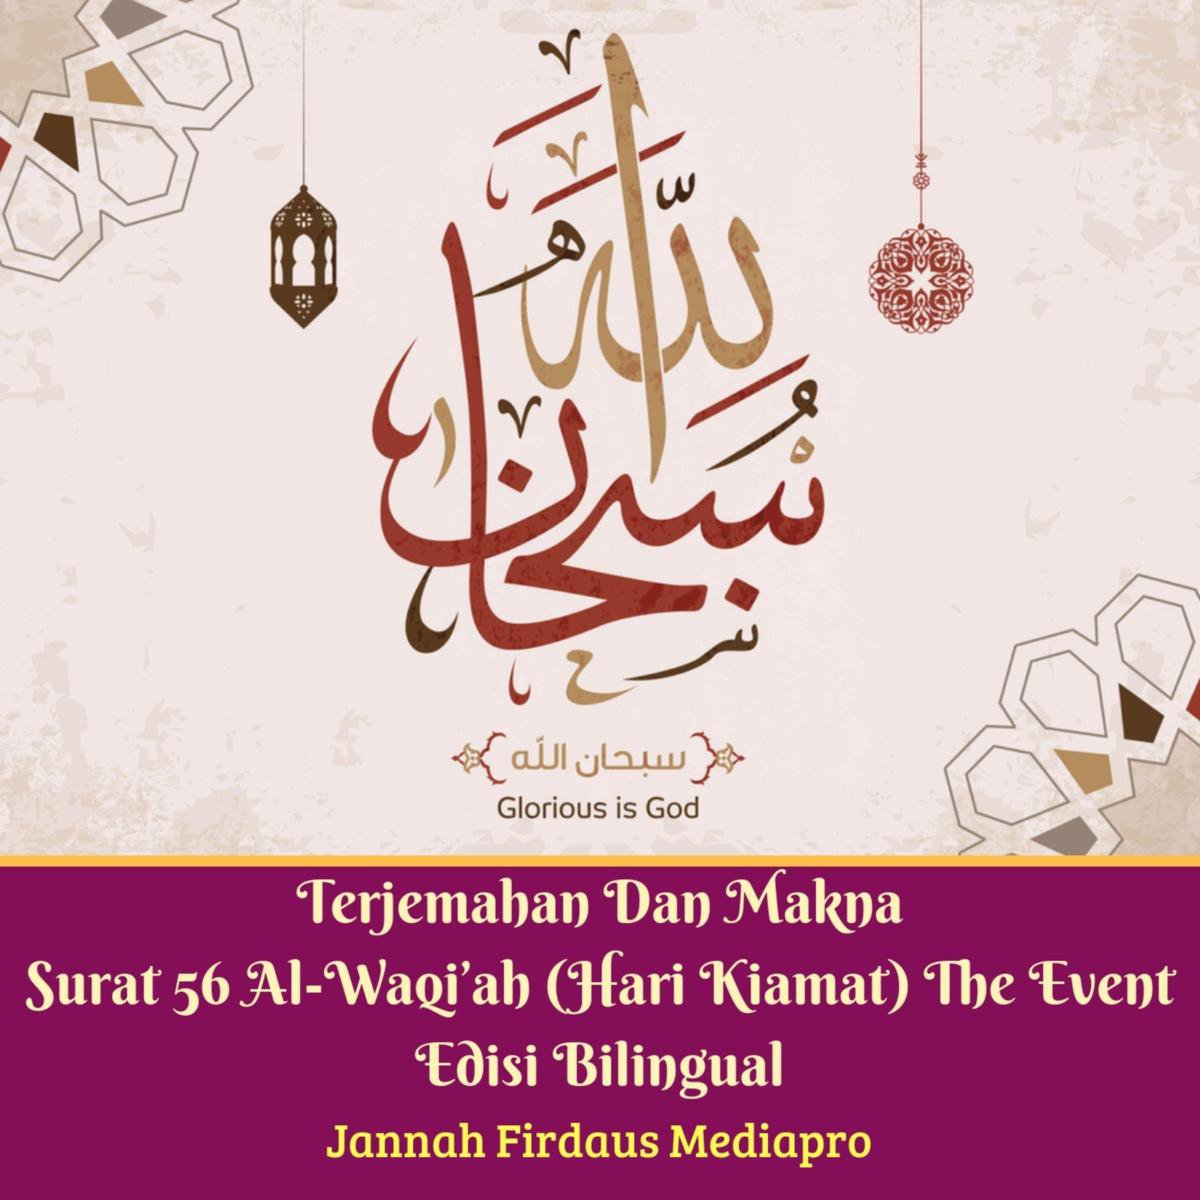 Terjemahan Dan Makna Surat 56 Al-Waqi’ah (Hari Kiamat) The Event Edisi Bilingual - Jannah Firdaus Mediapro